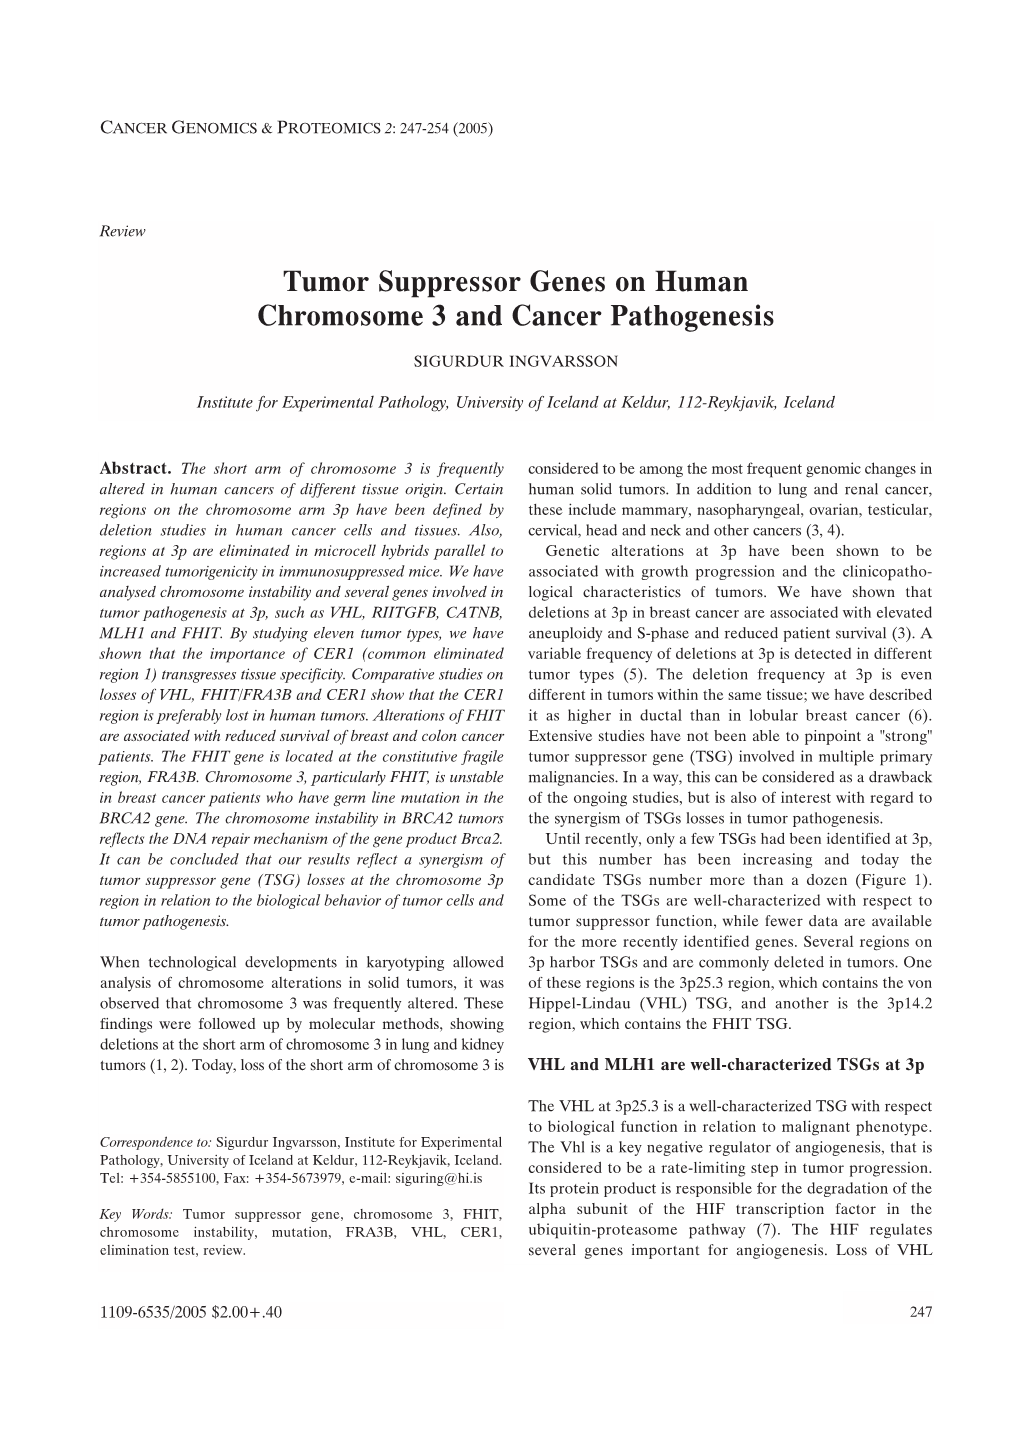 Tumor Suppressor Genes on Human Chromosome 3 and Cancer Pathogenesis